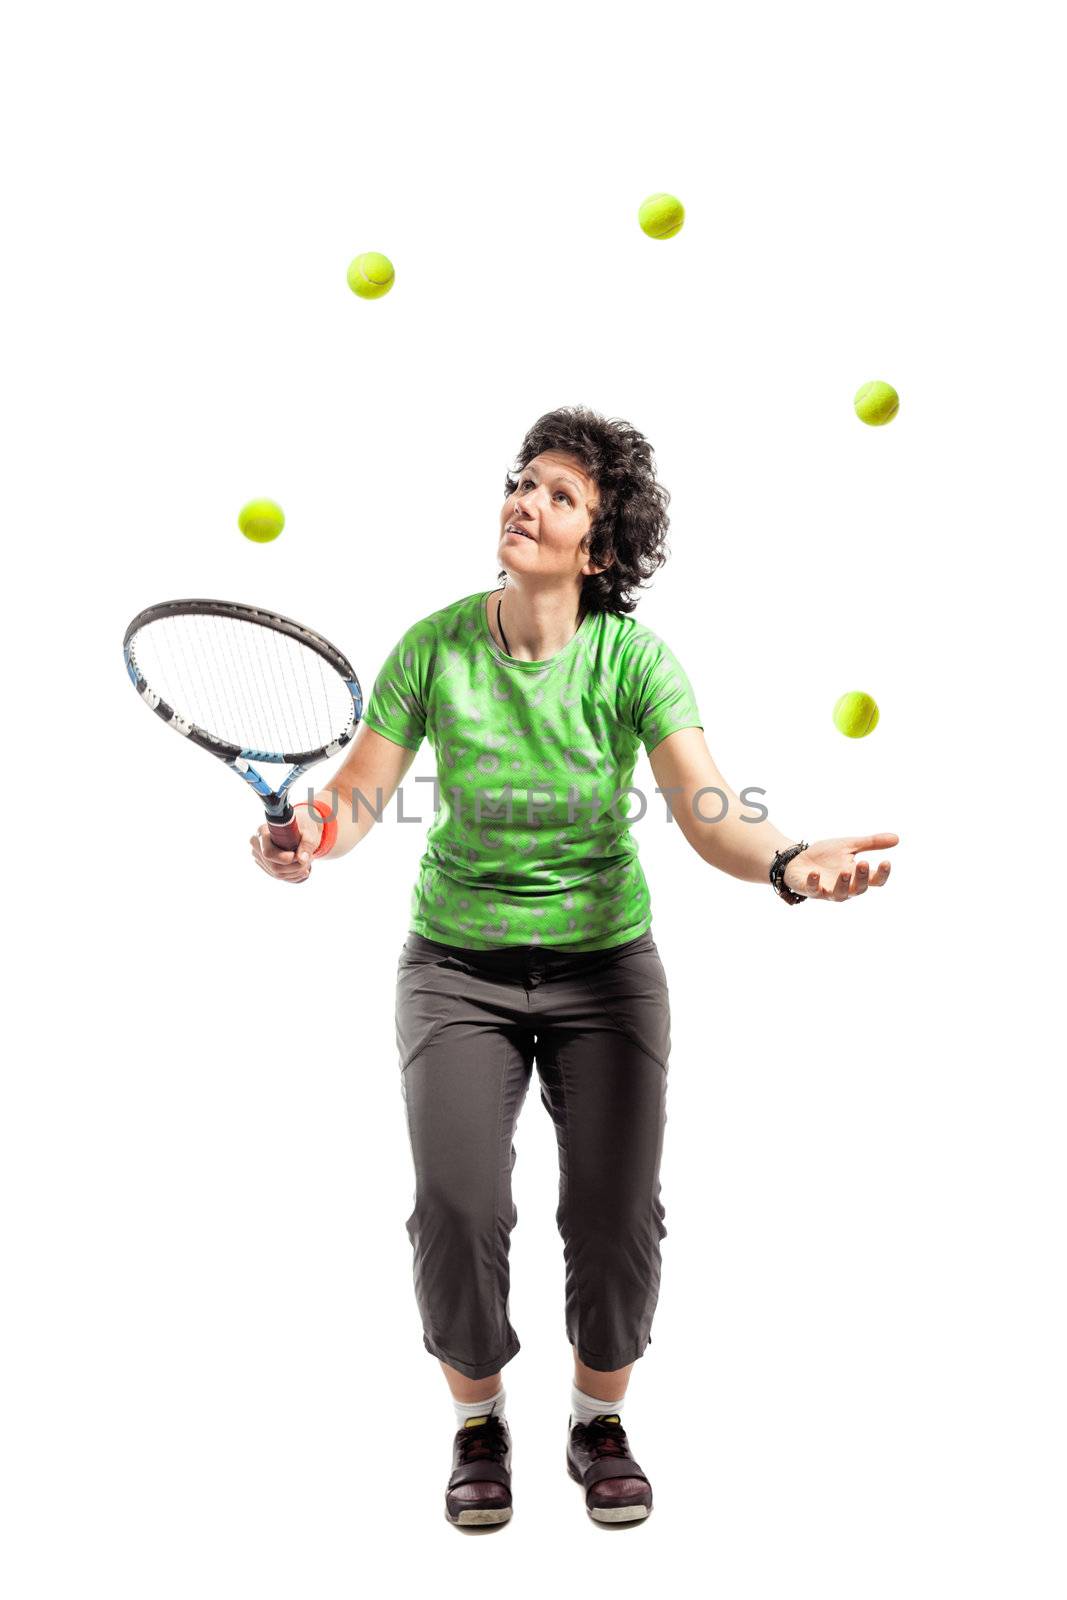 Tennis juggler by kokimk